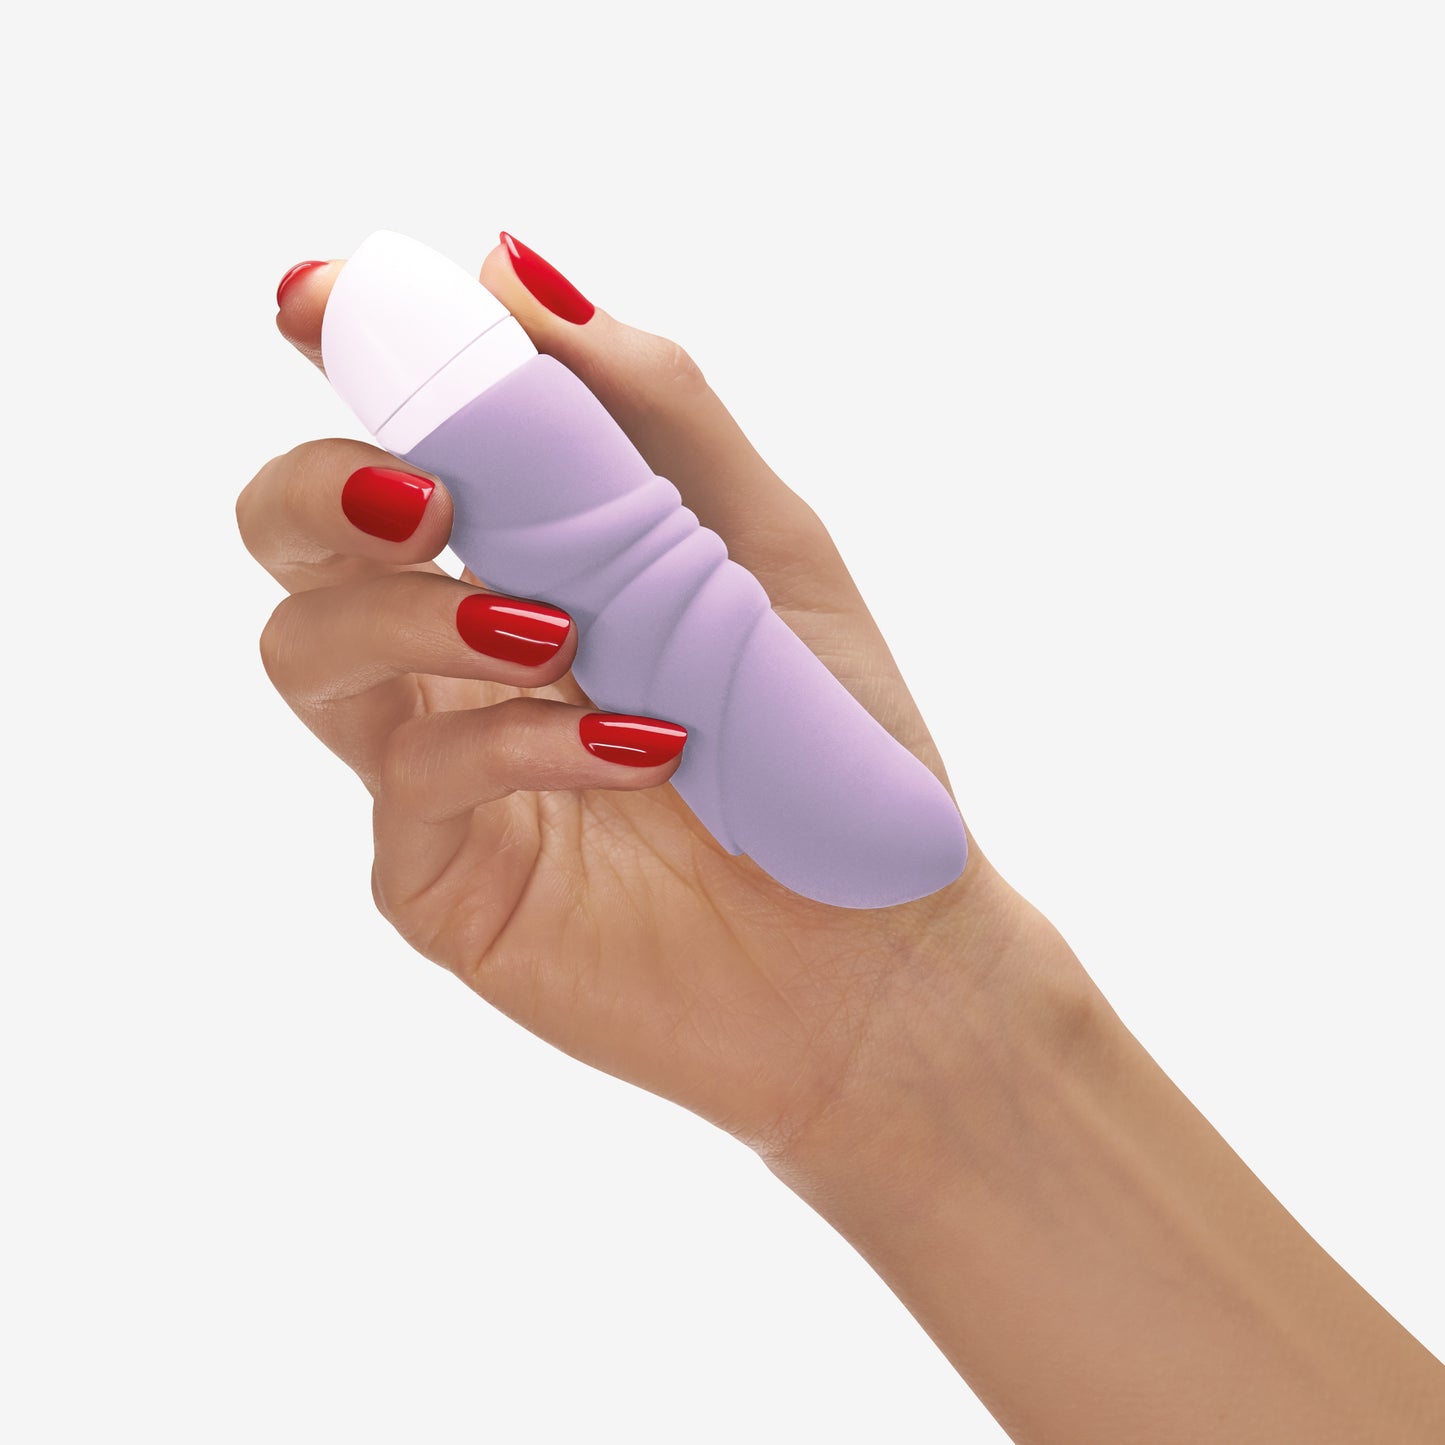 Jam mini vibrator handshot with lilac toy